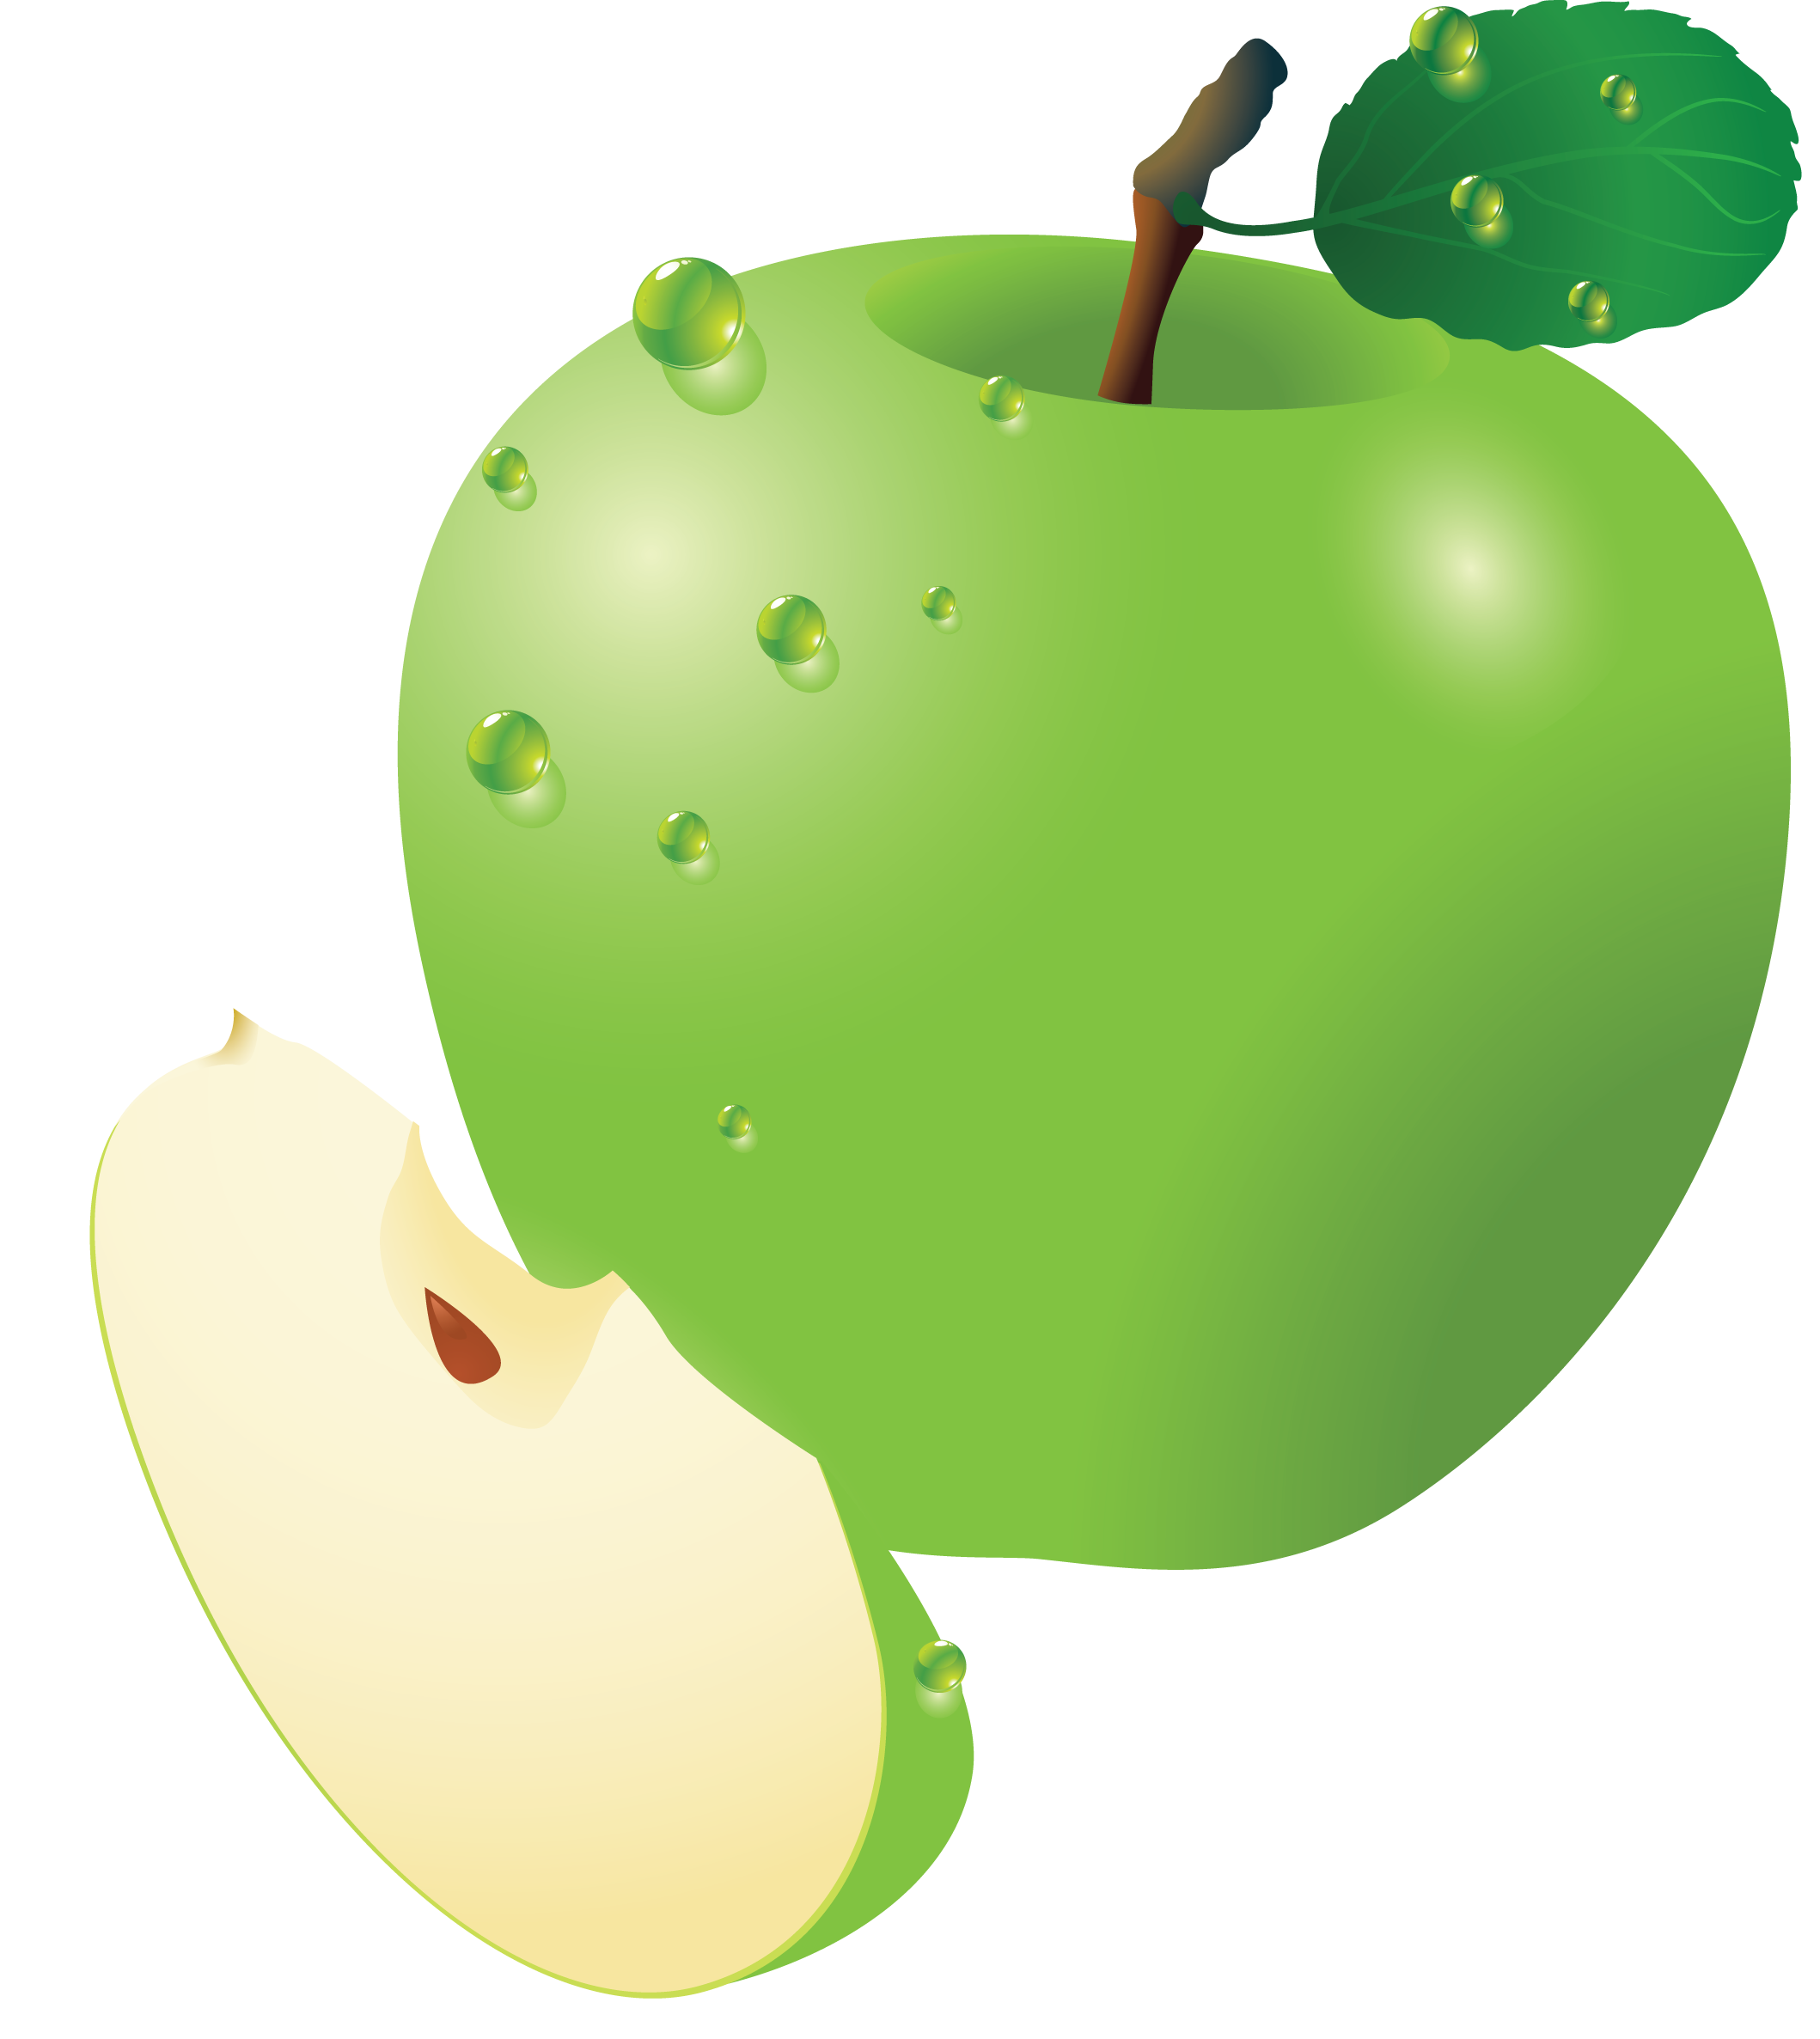 Green Apple’s